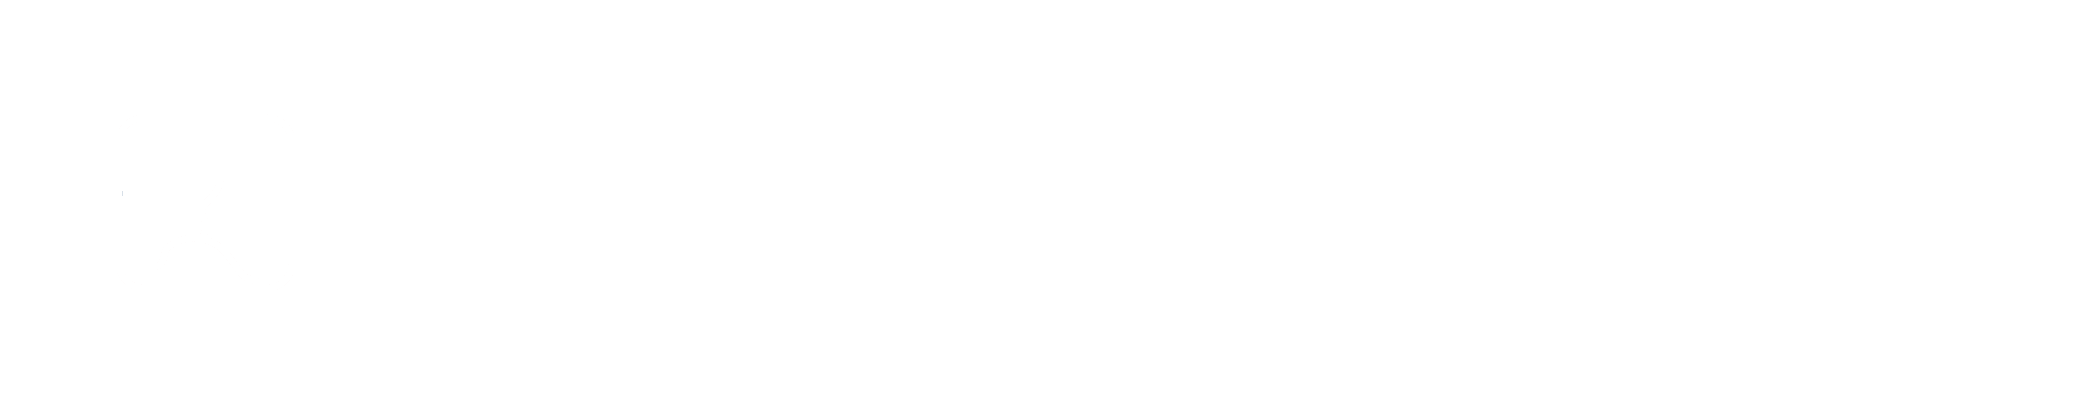 Zoning PUD (flexible industrial zoning)